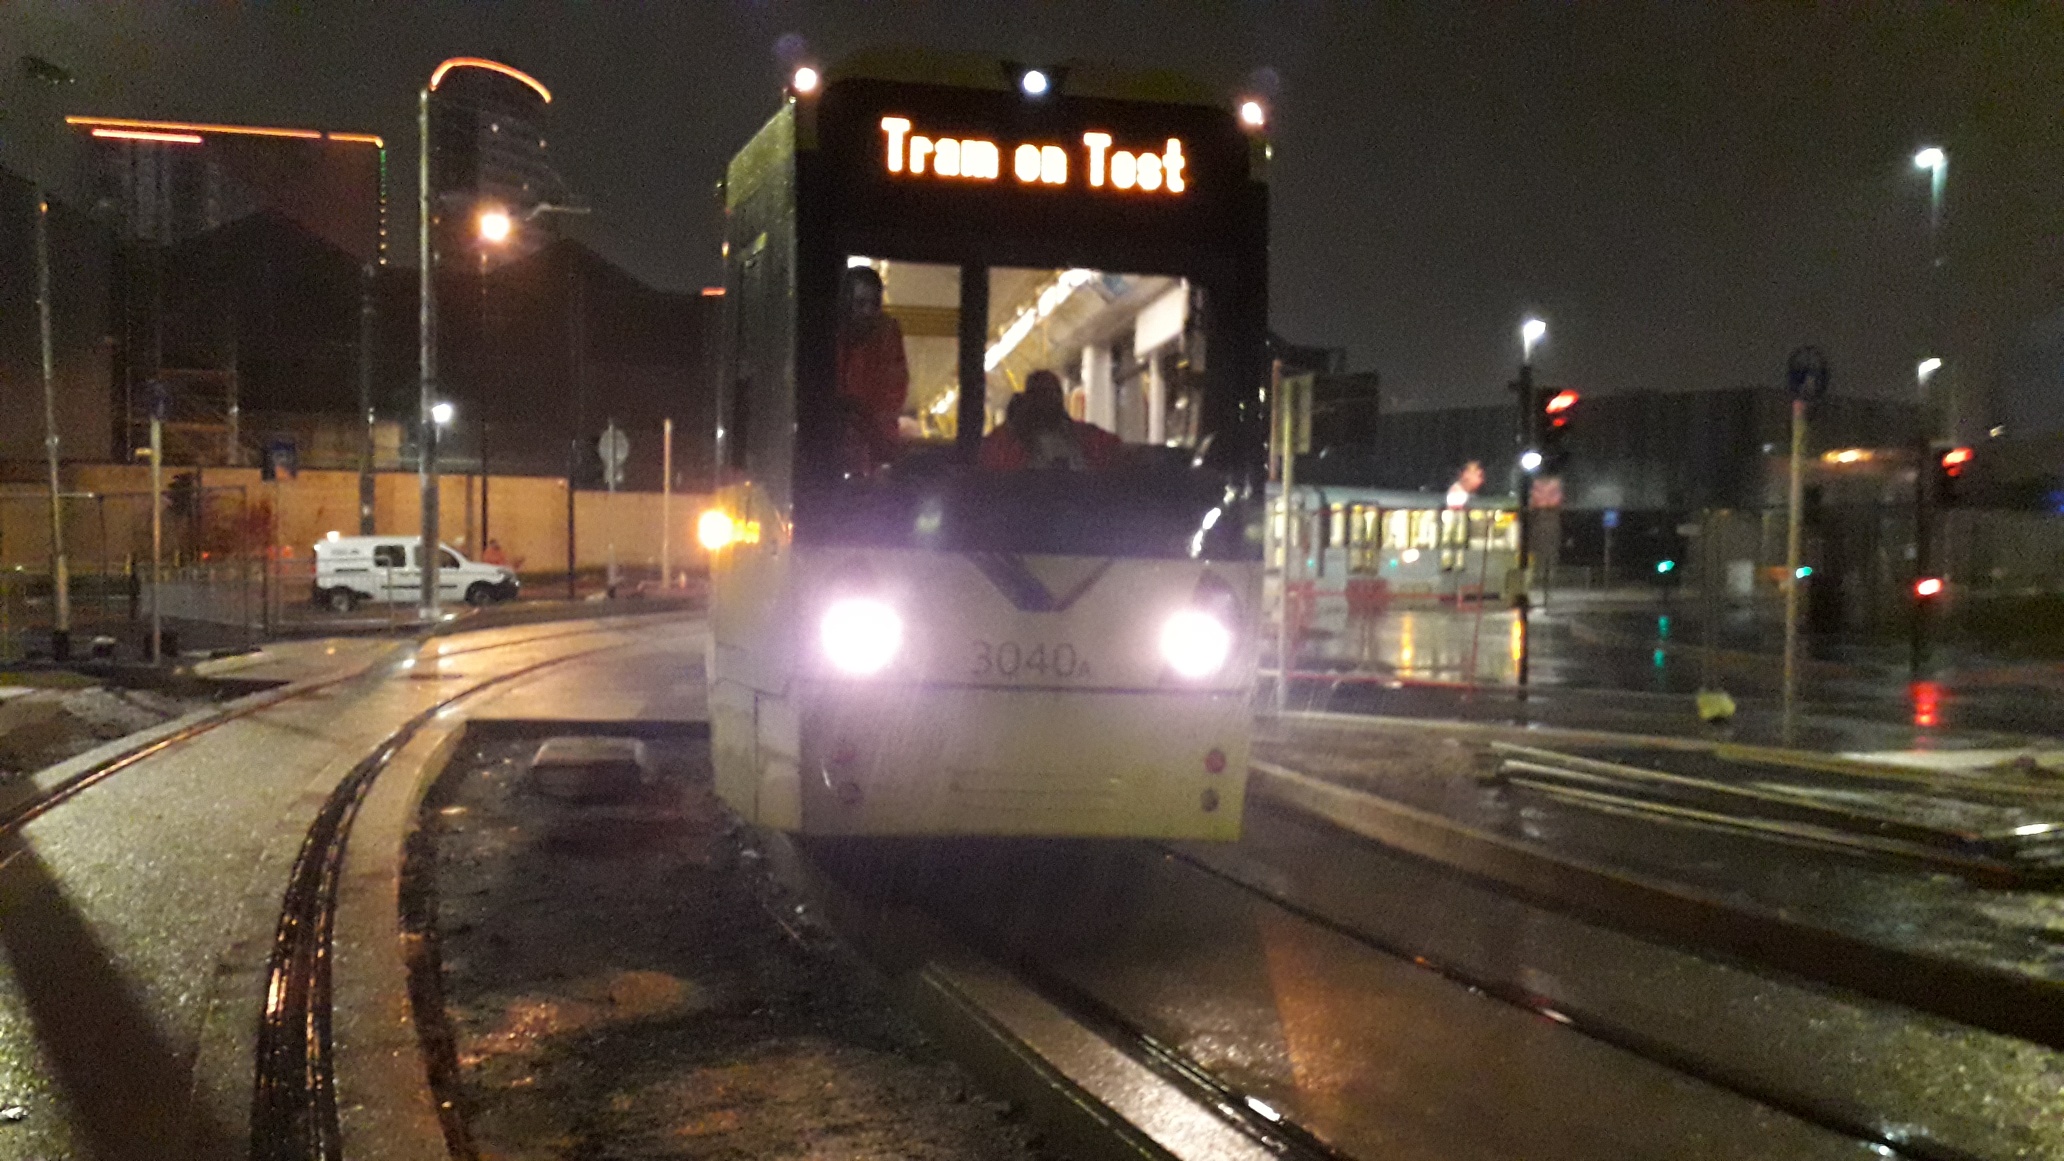 Trafford Park Line test tram